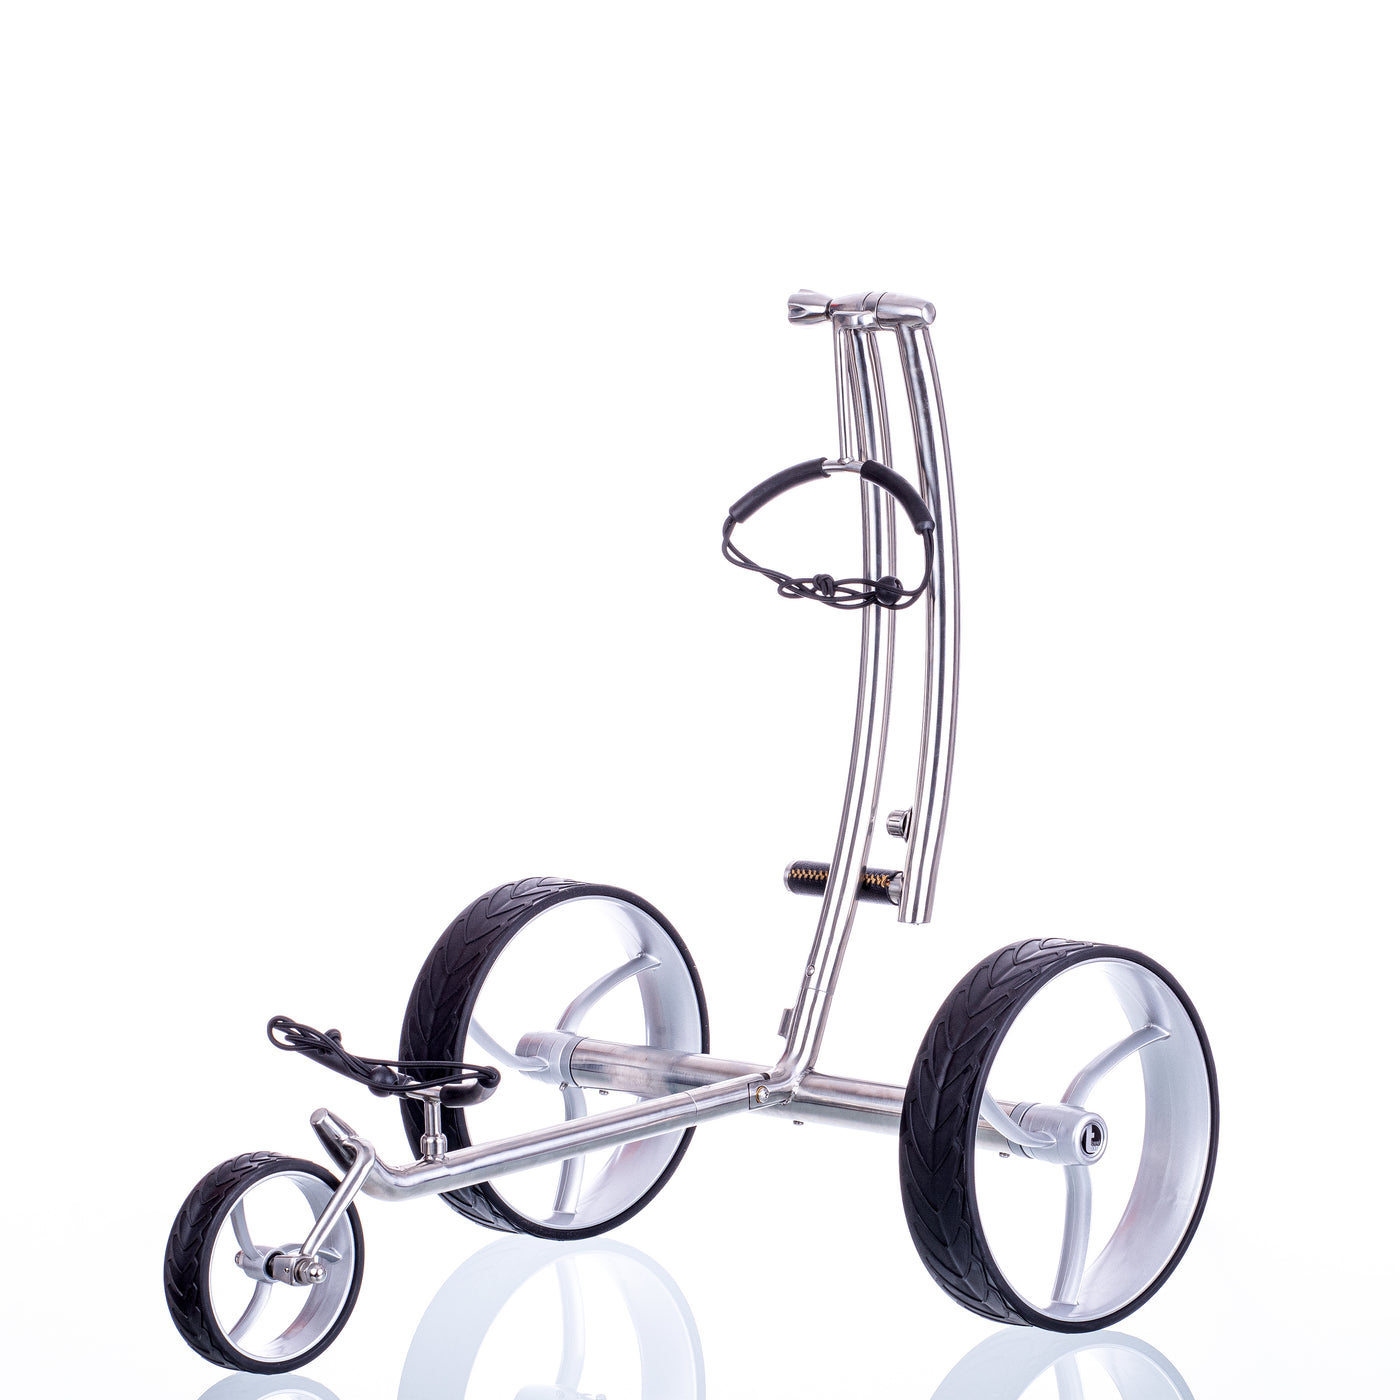 Trendgolf electric trolley walker model 2023 stainless steel, polished